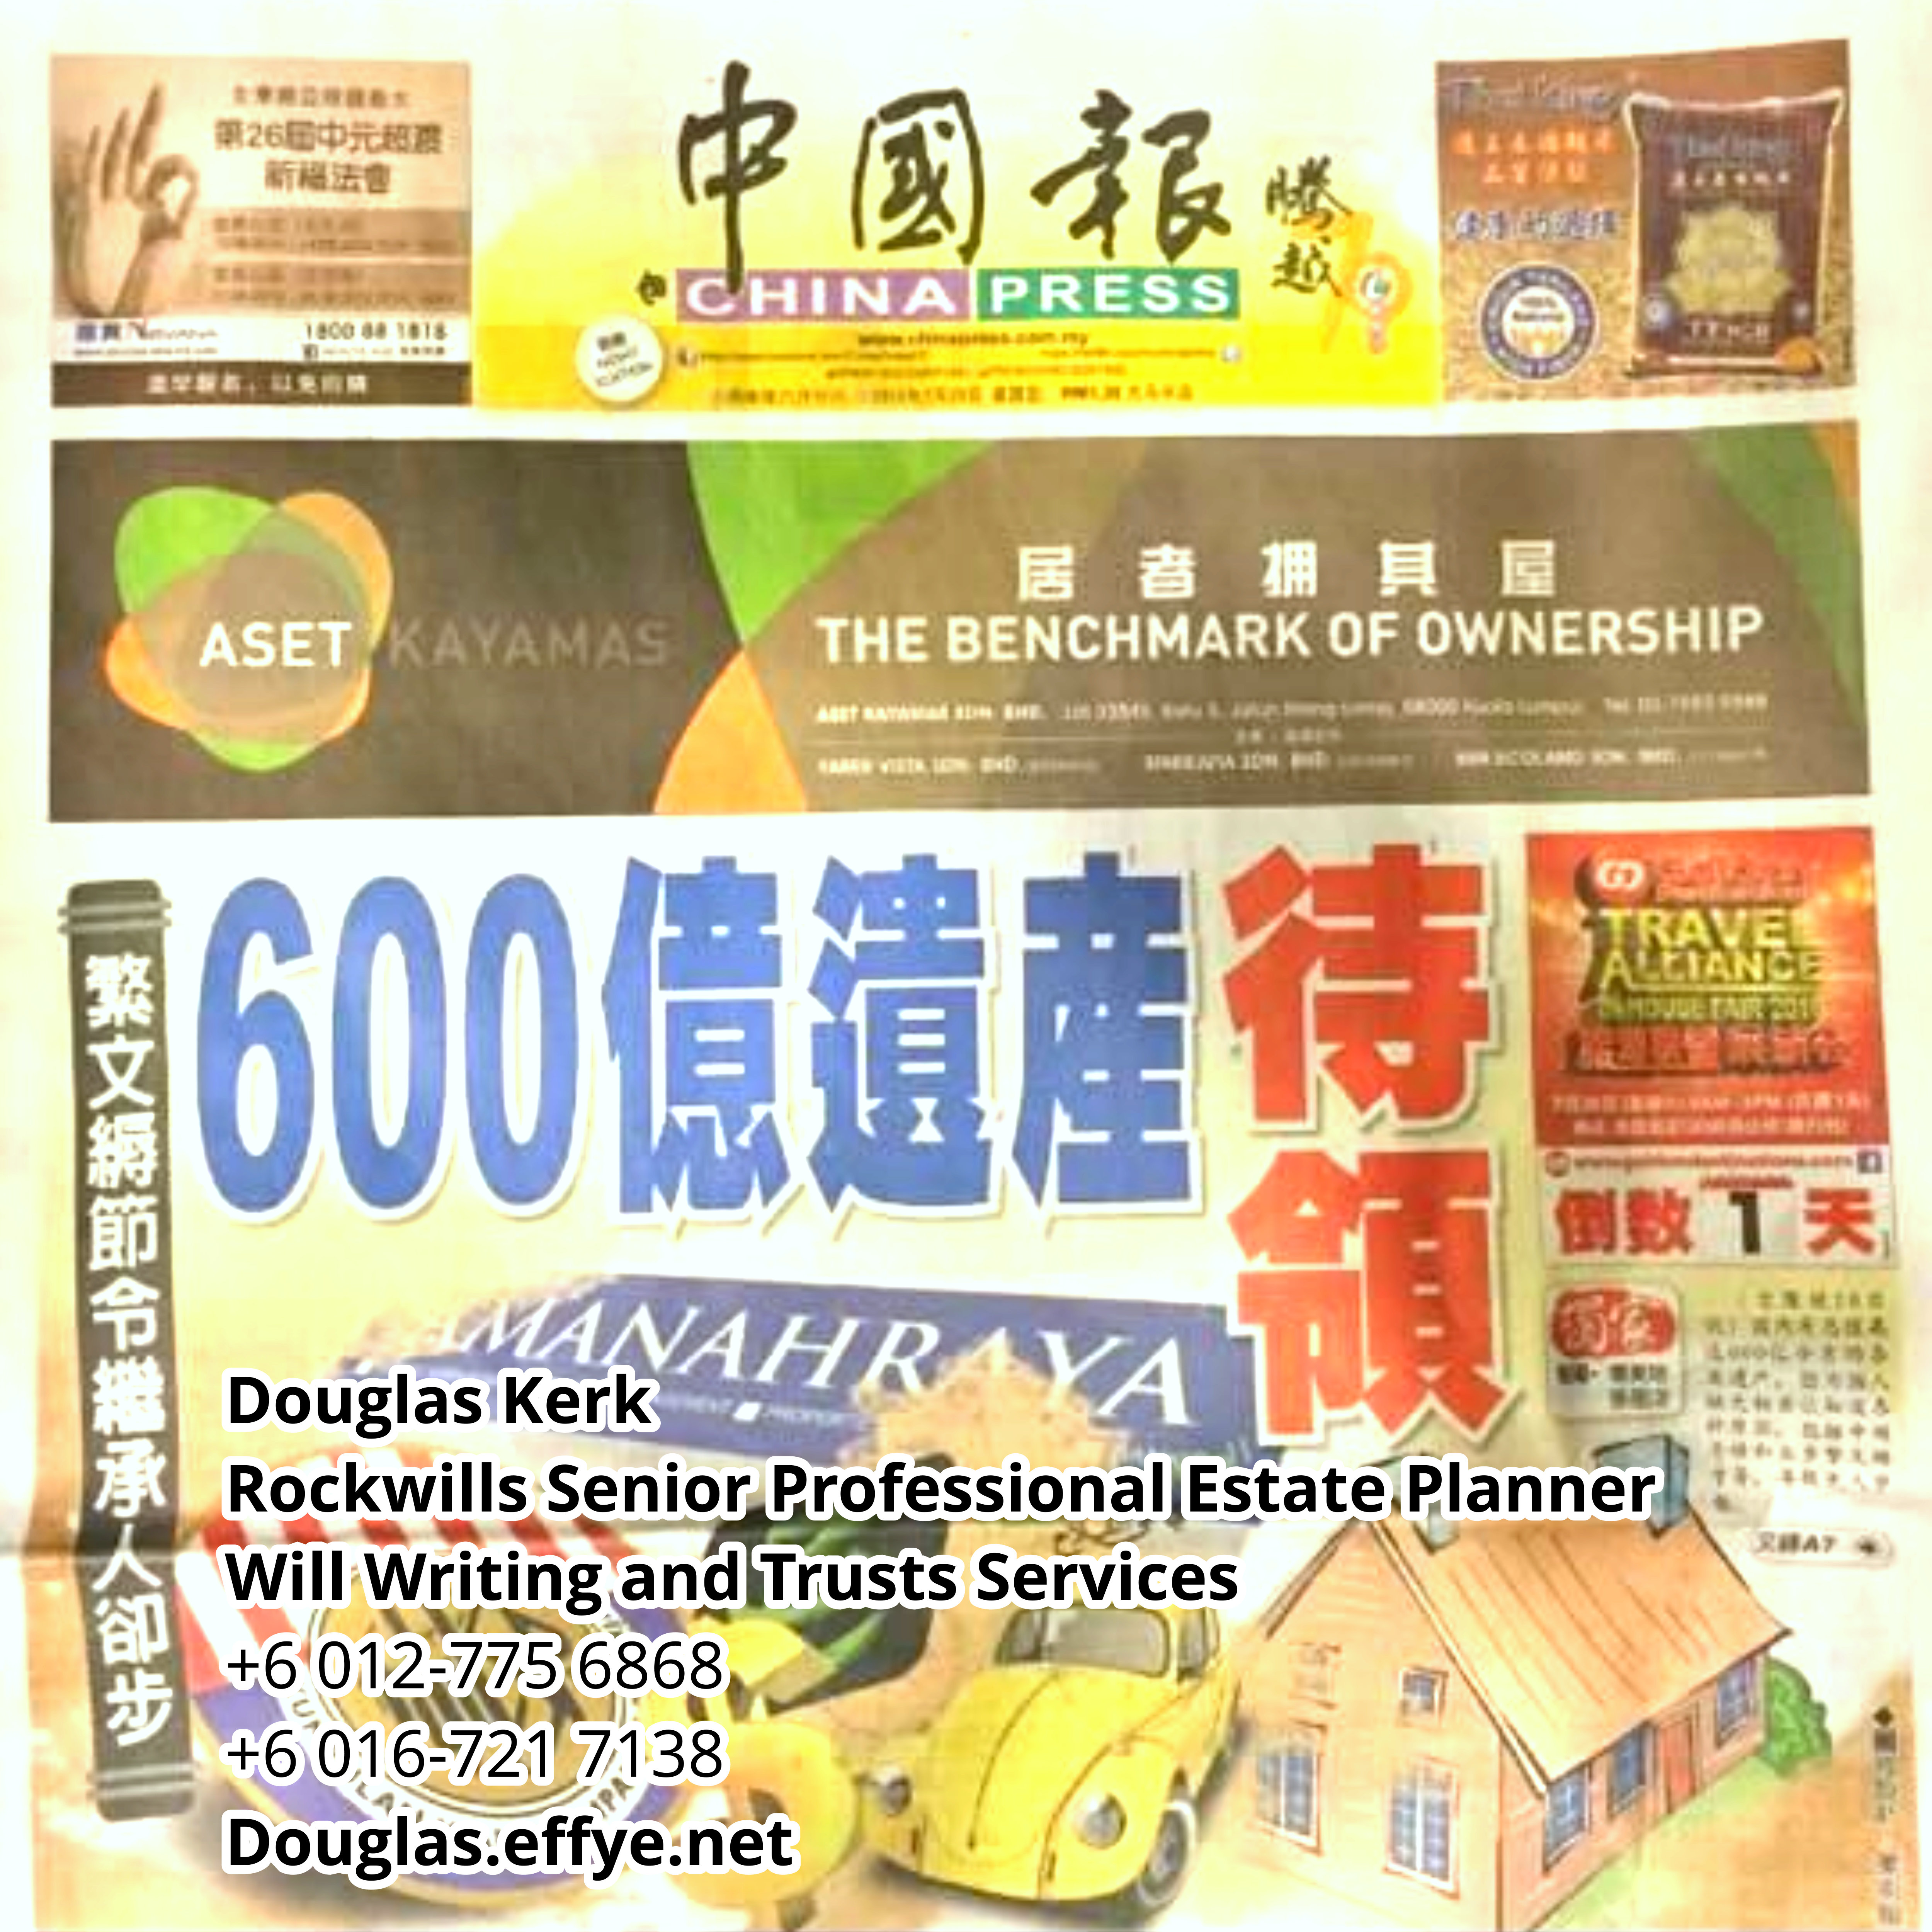 Douglas Kerk Rockwills Senior Professional Estate Planner - Will Writing and Trusts Services Batu Pahat and Kluang Johor Malaysia Property Management PA09